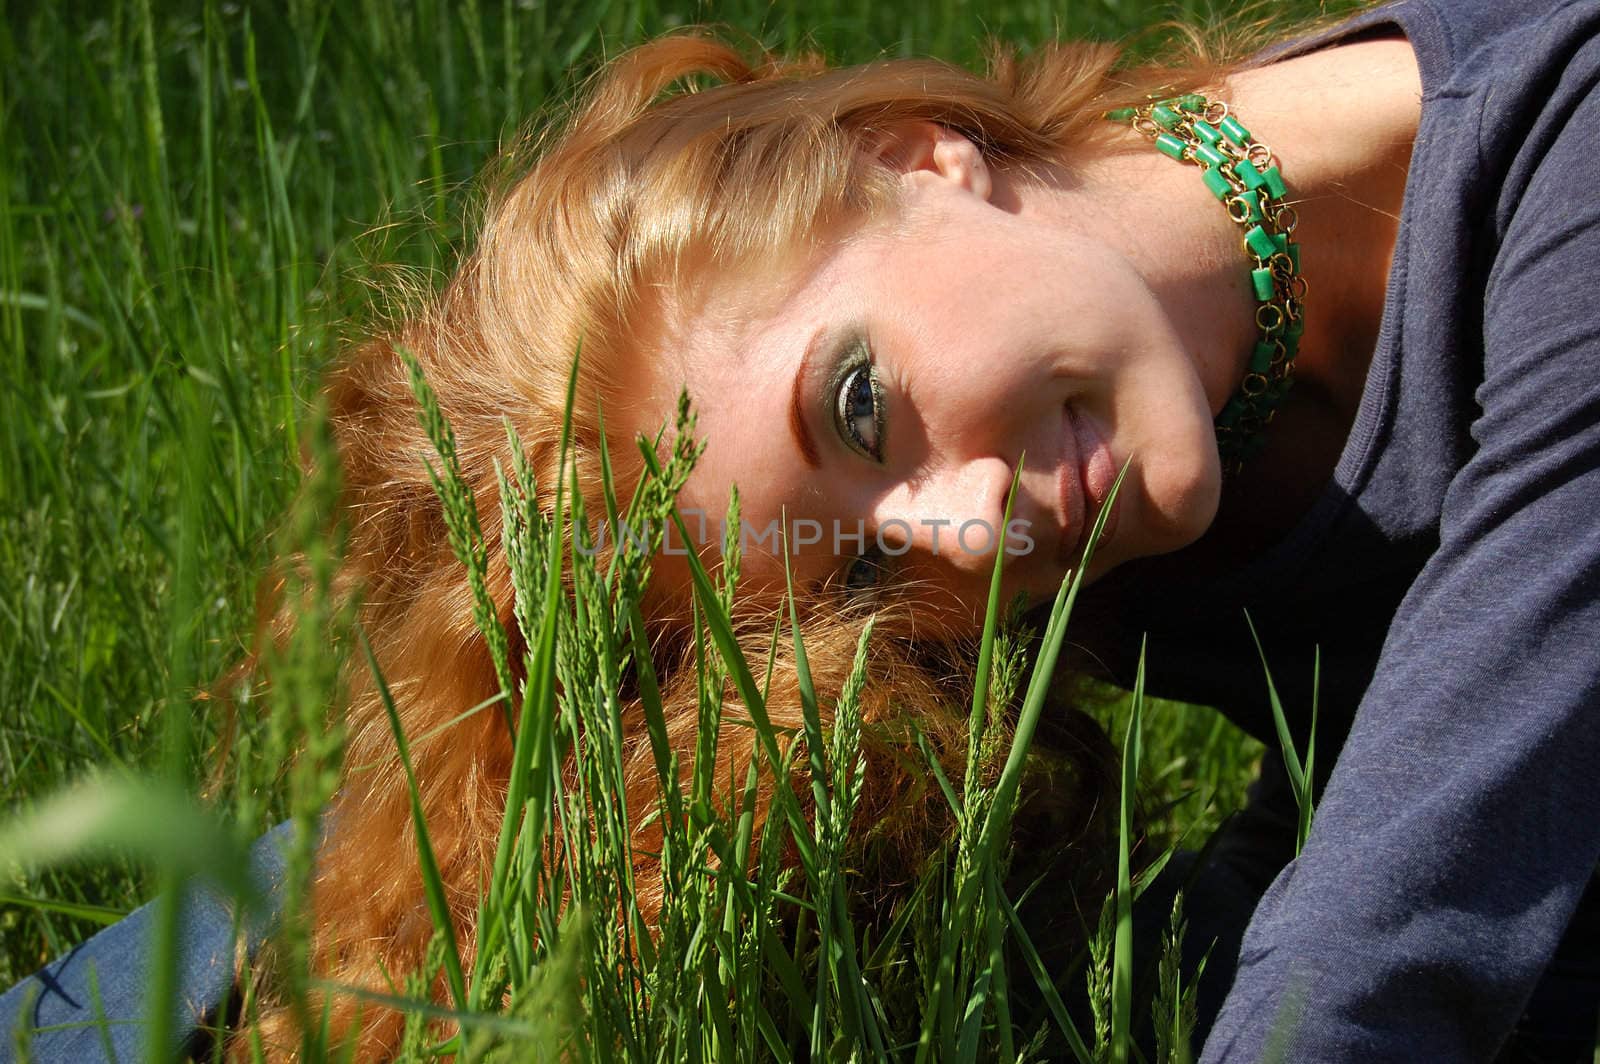 Beautiful redhead girl over high green grass